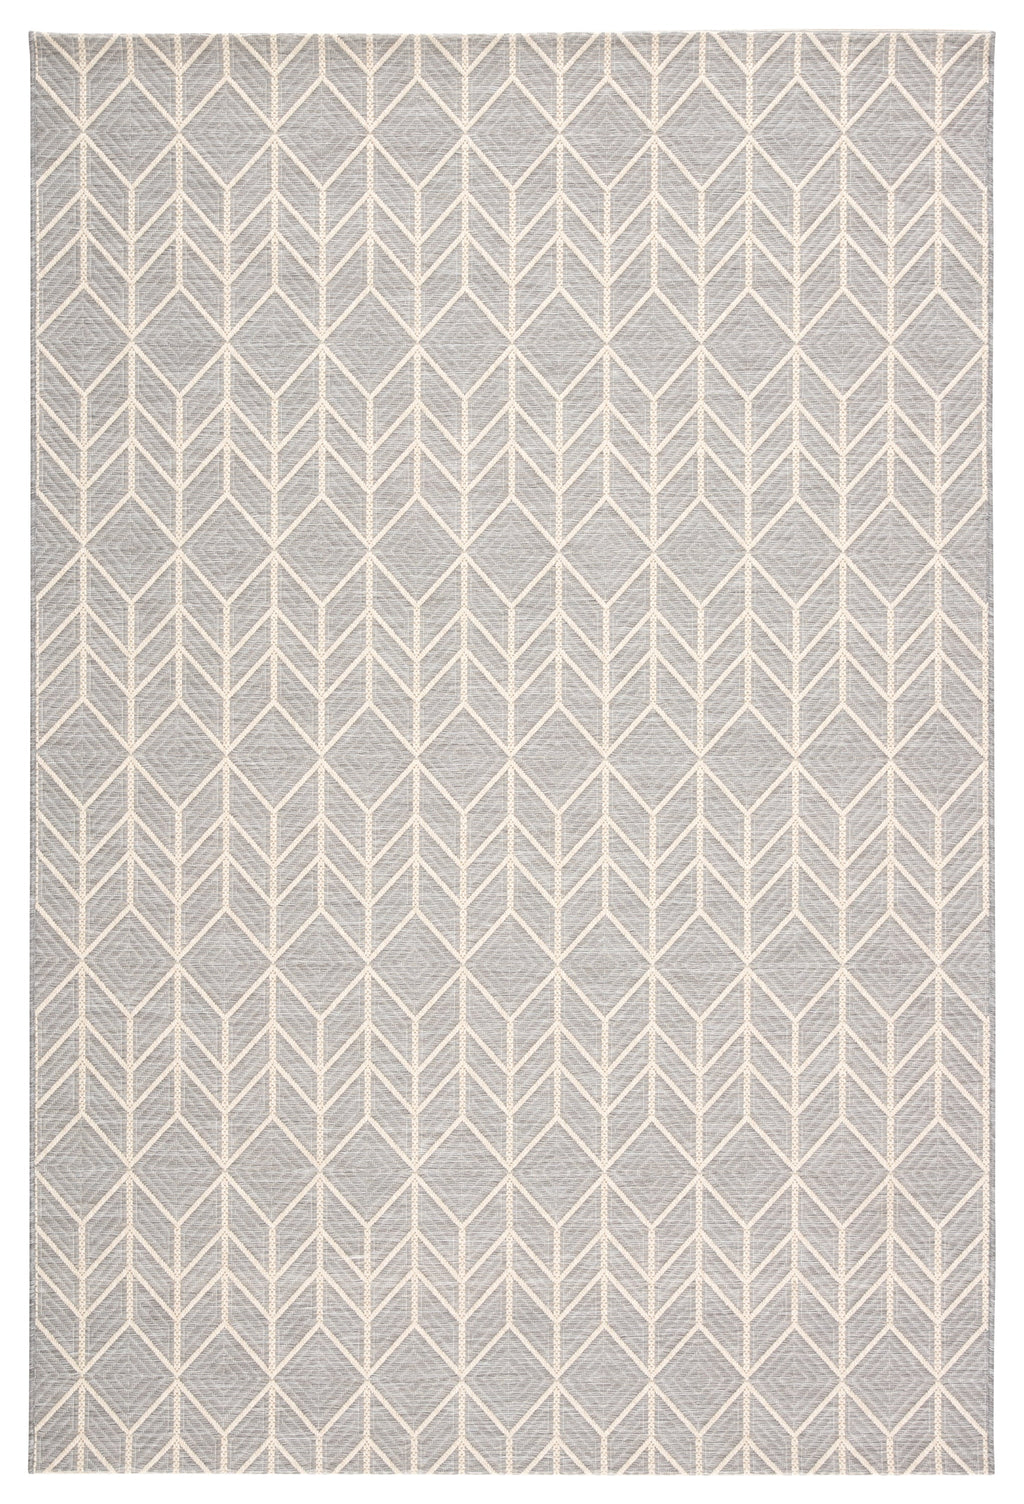 galloway indoor outdoor chevron gray cream rug design by jaipur 1